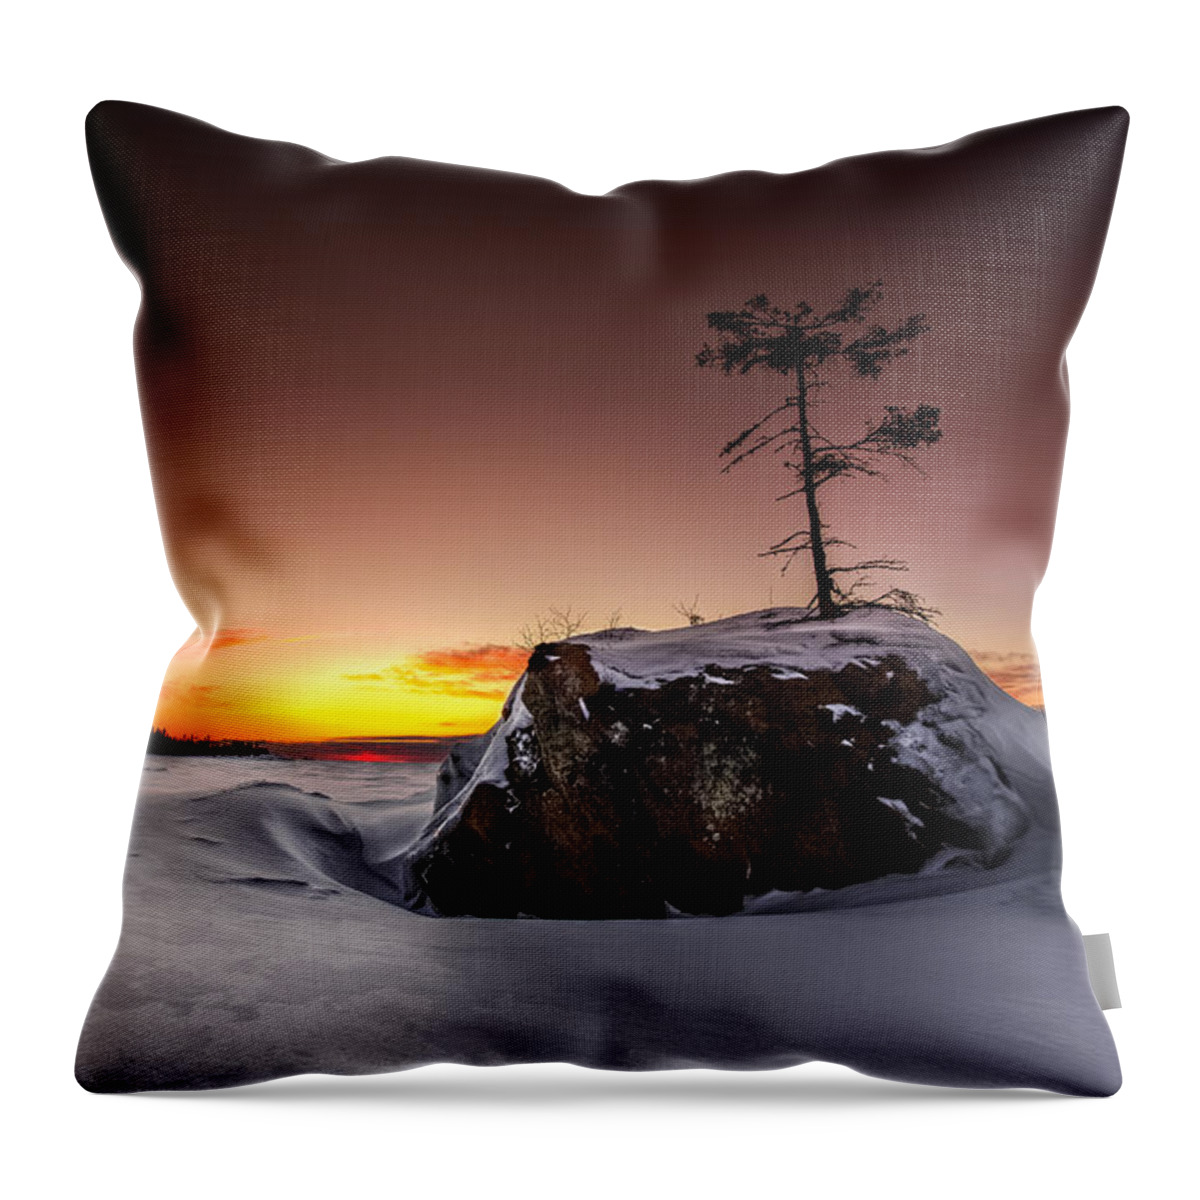 Boulder Throw Pillow featuring the photograph Red Sun by Jakub Sisak